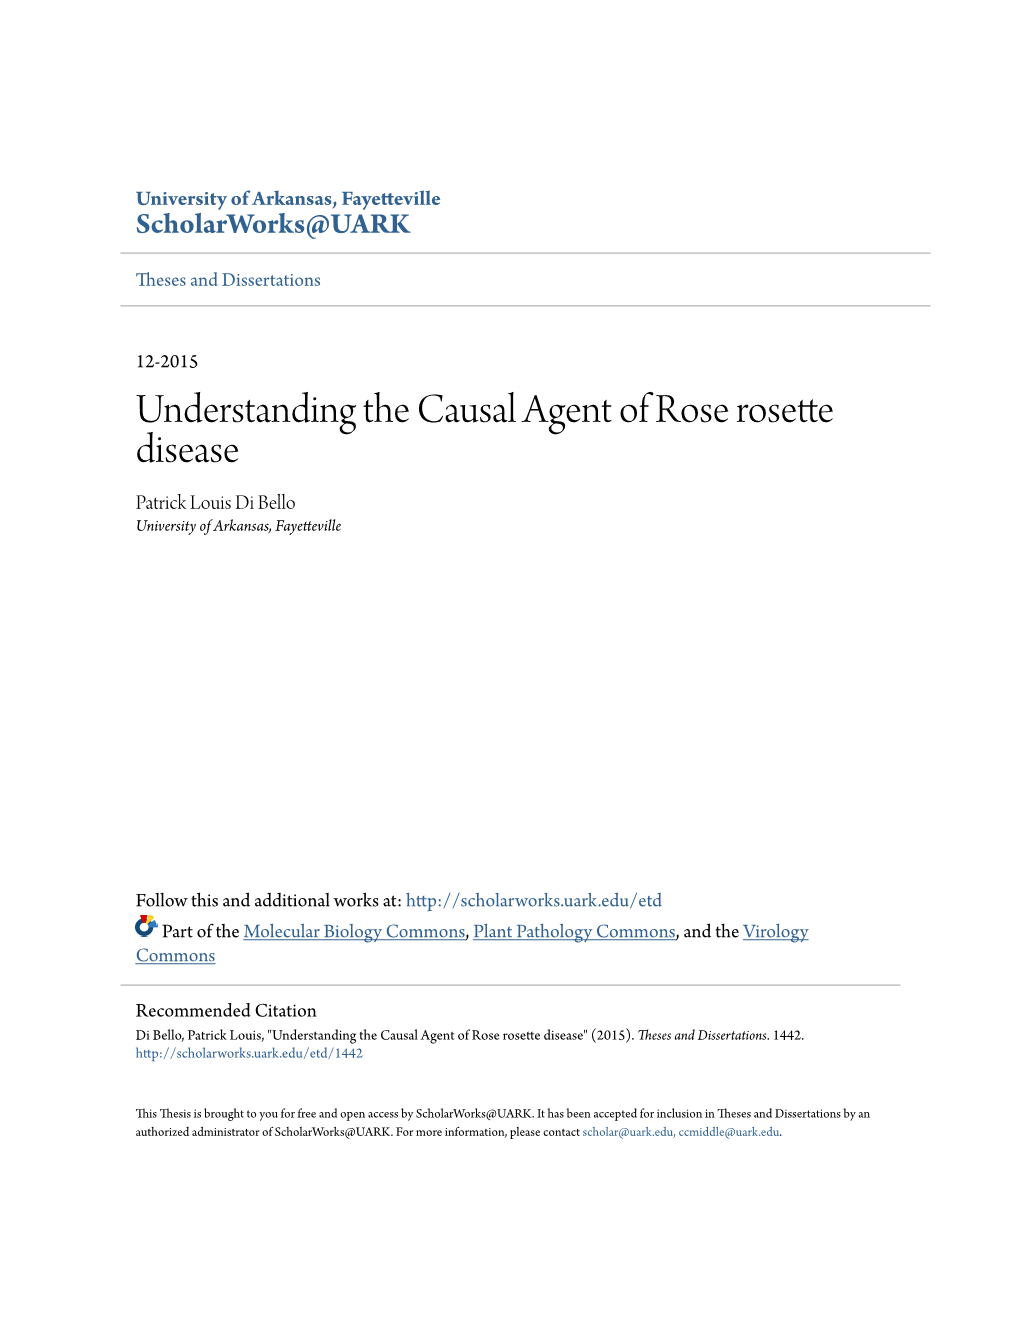 Understanding the Causal Agent of Rose Rosette Disease Patrick Louis Di Bello University of Arkansas, Fayetteville